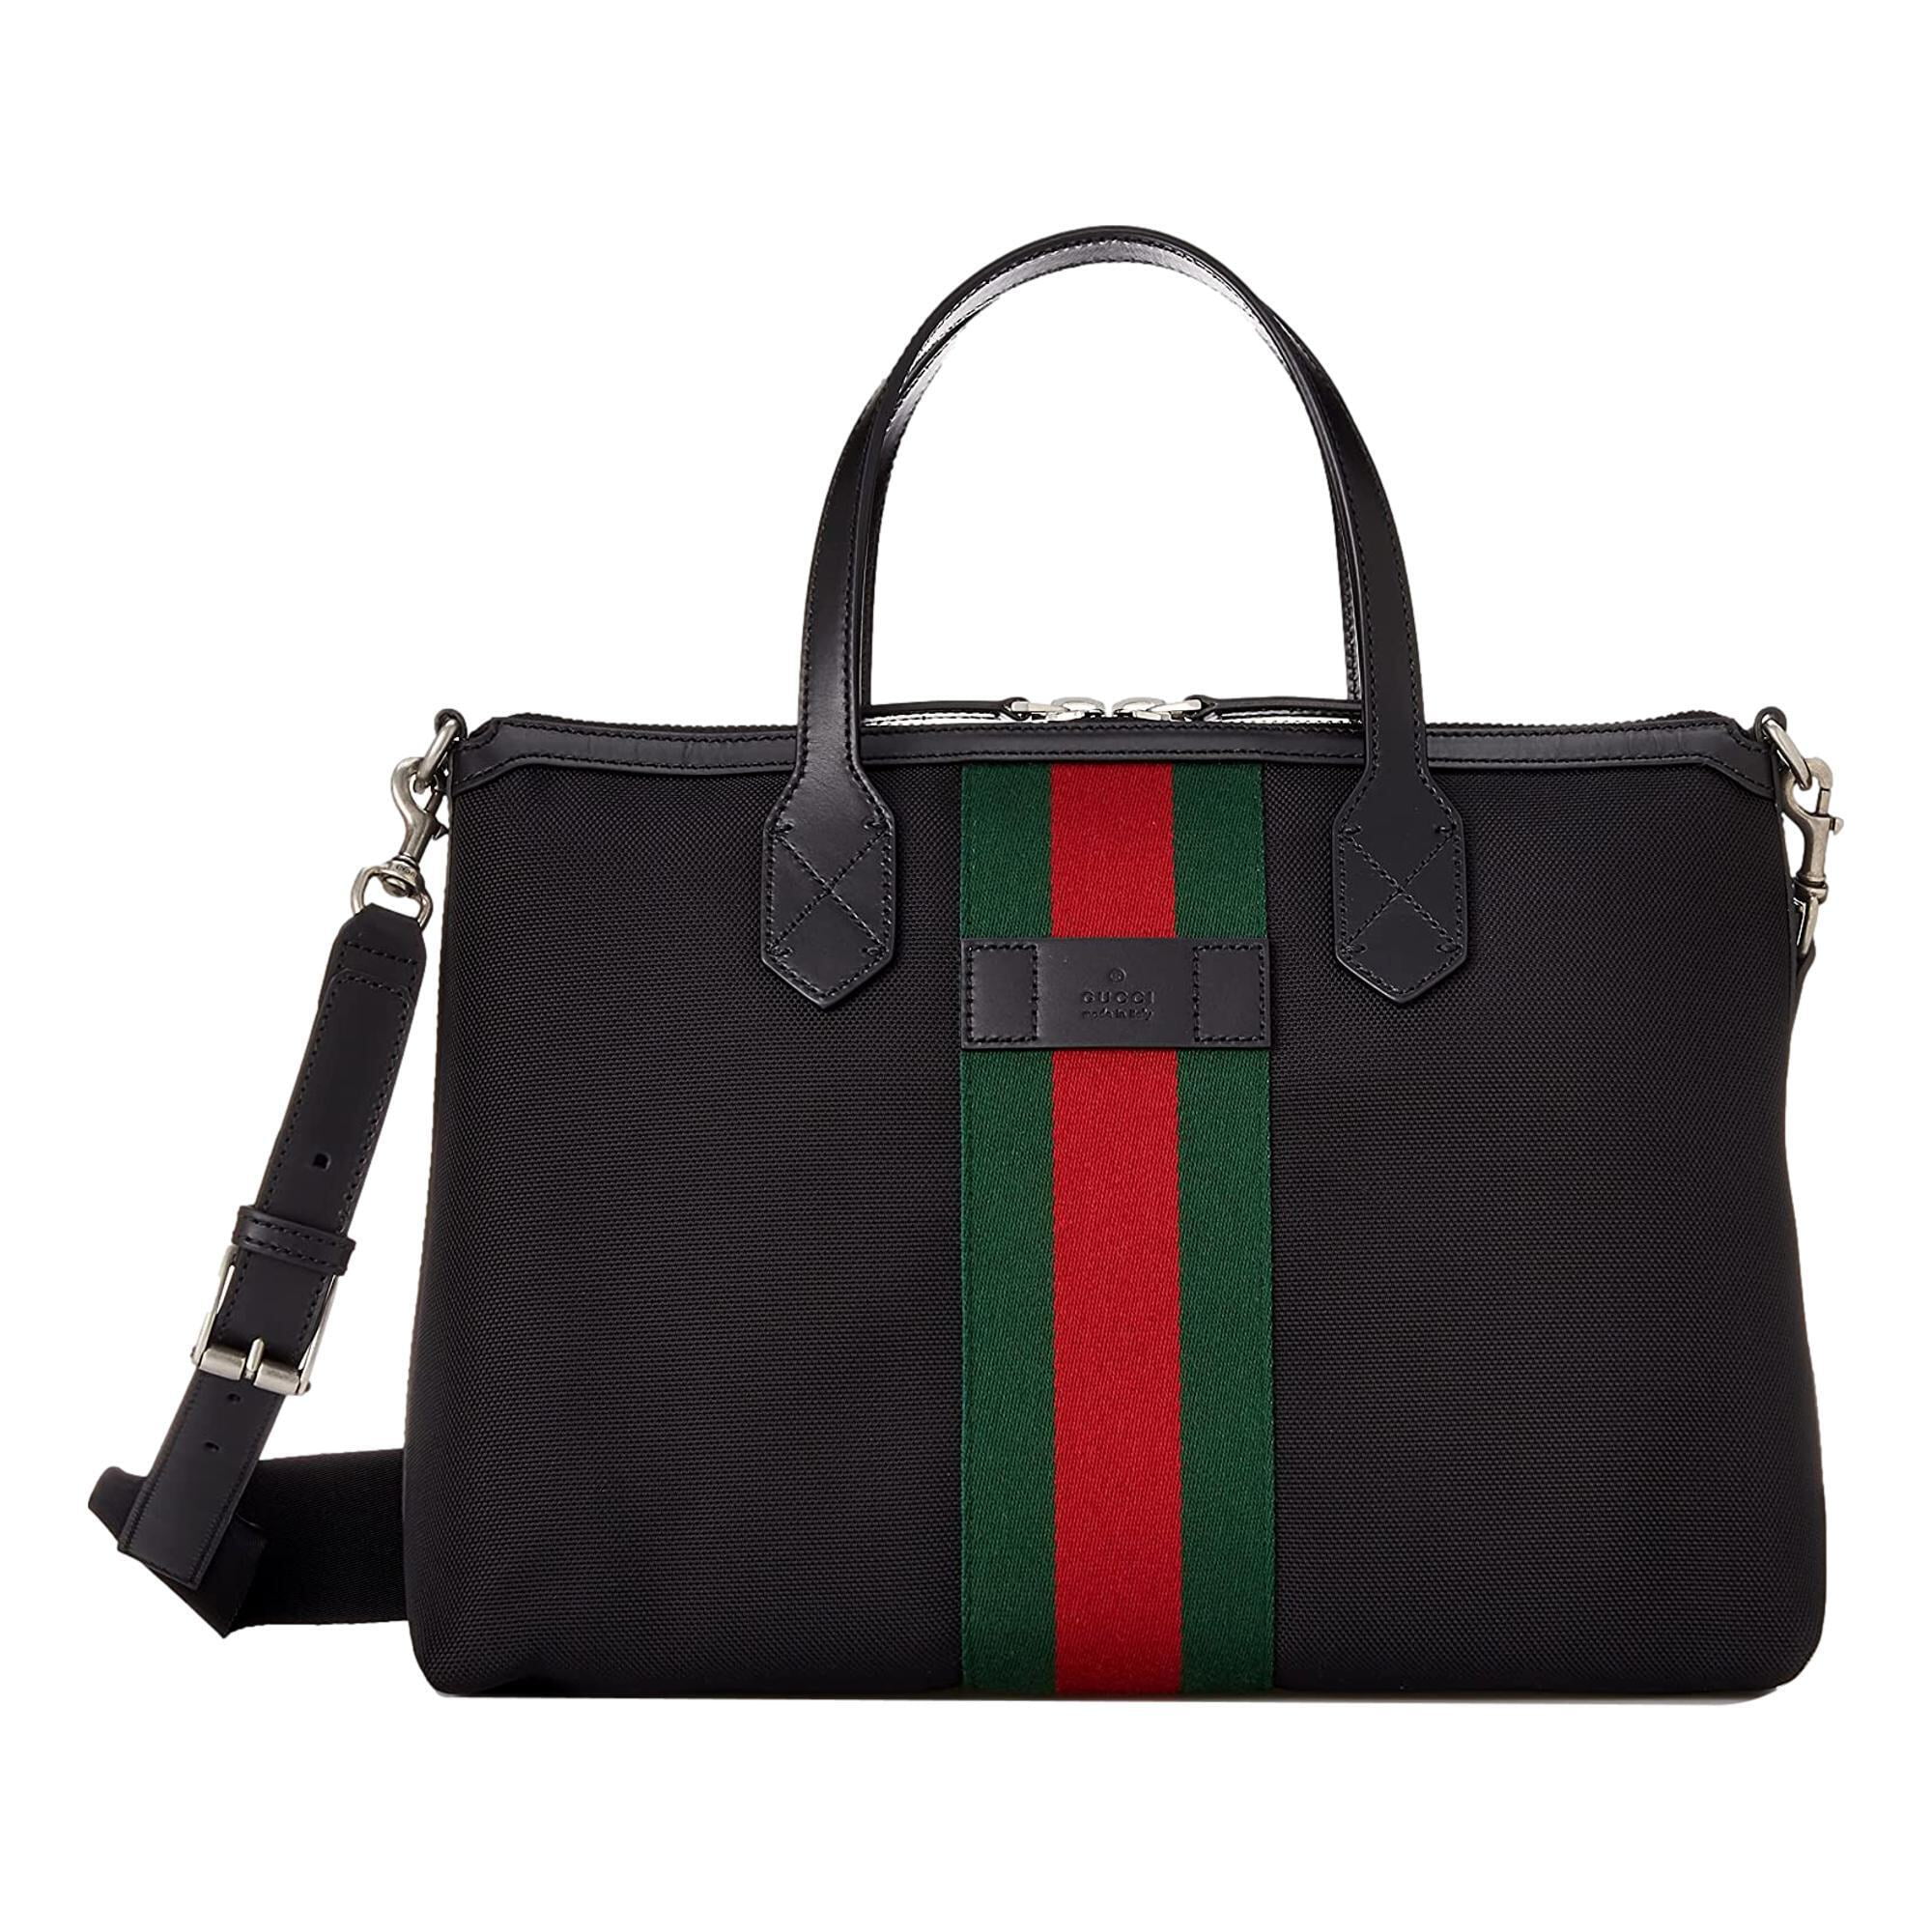 Gucci Deco medium tote bag in Black Leather